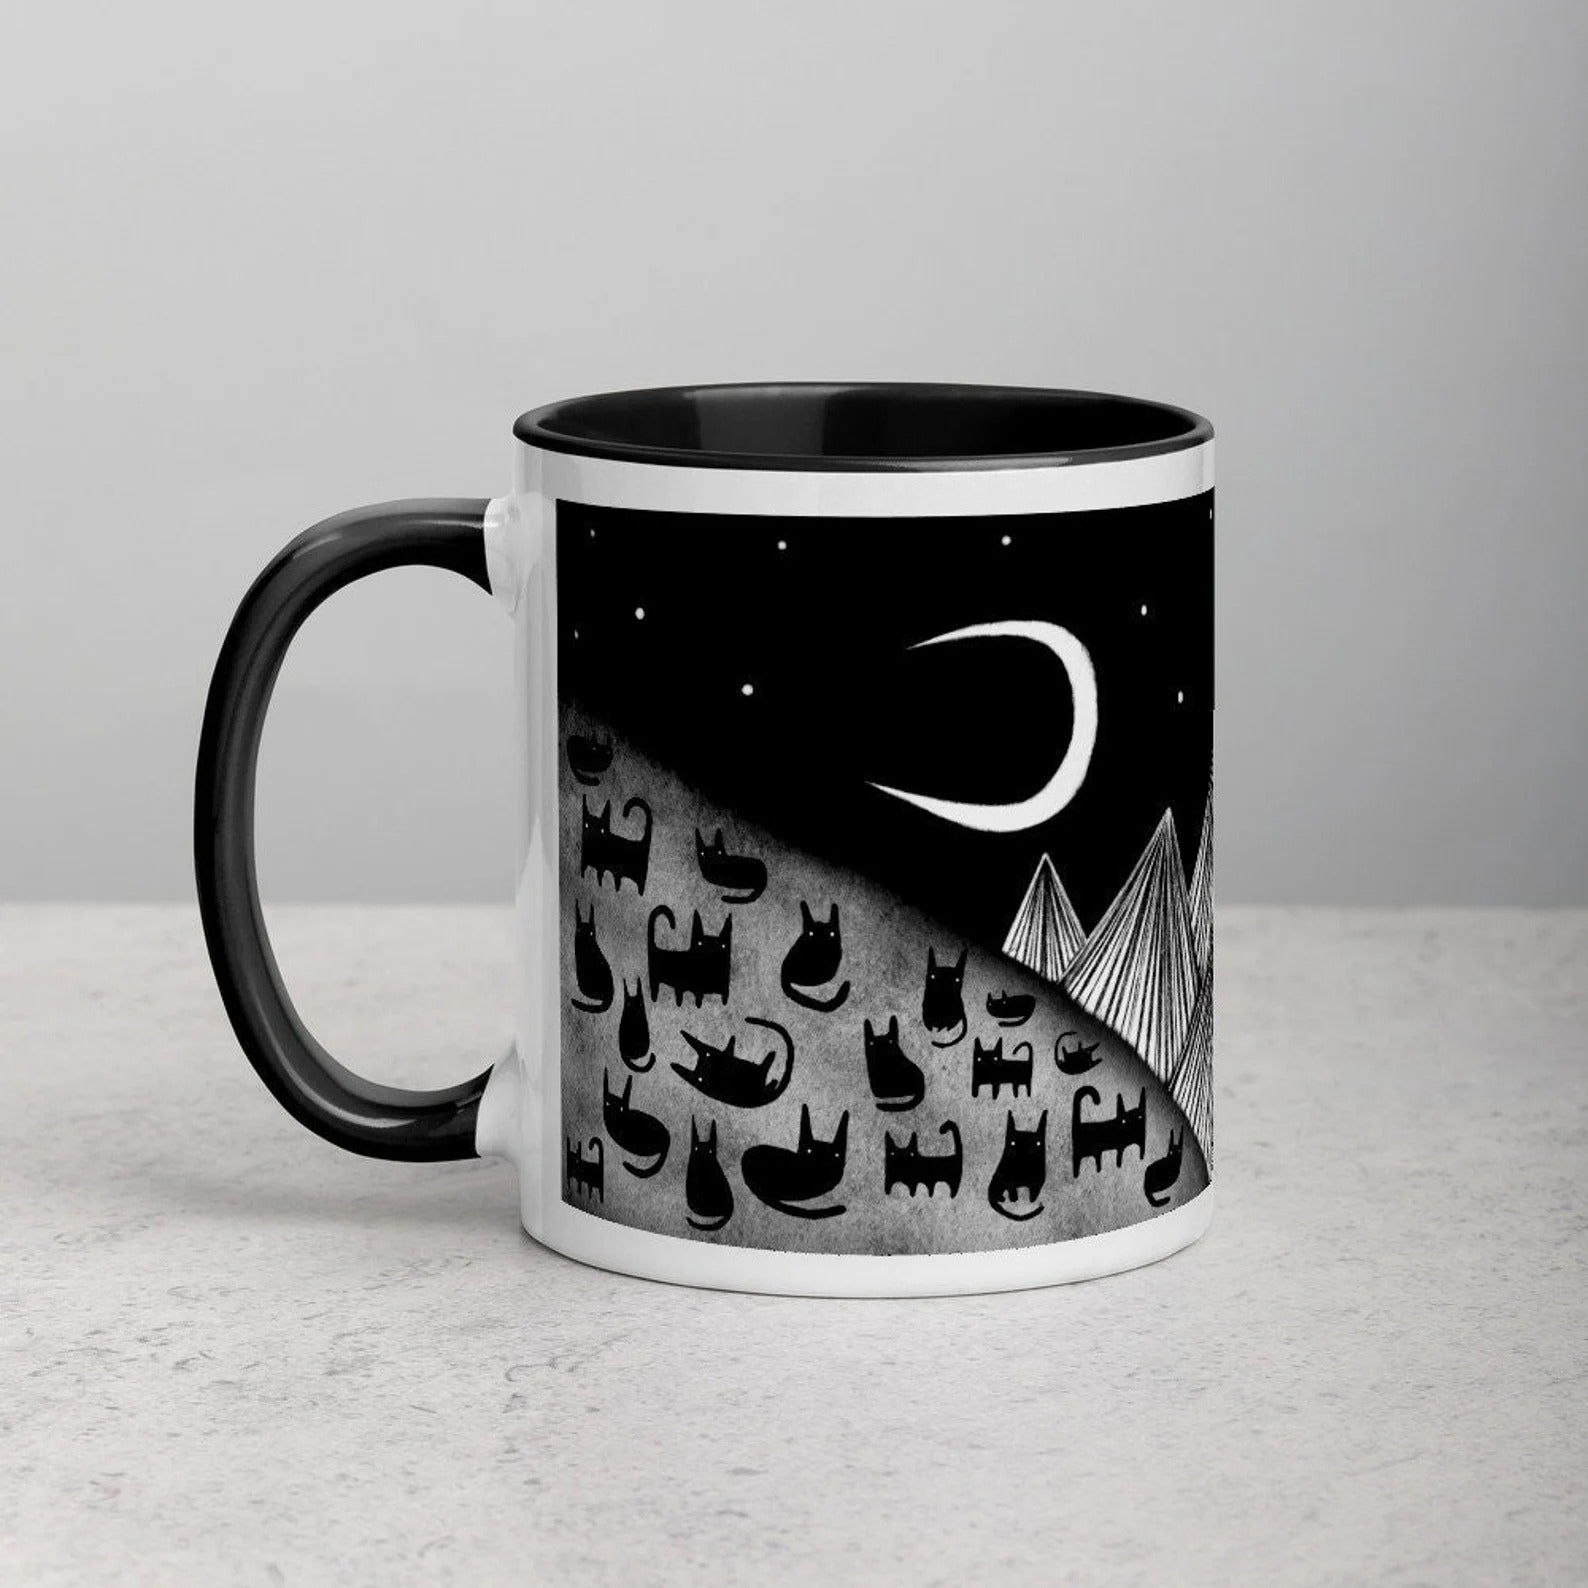 the black cat mug